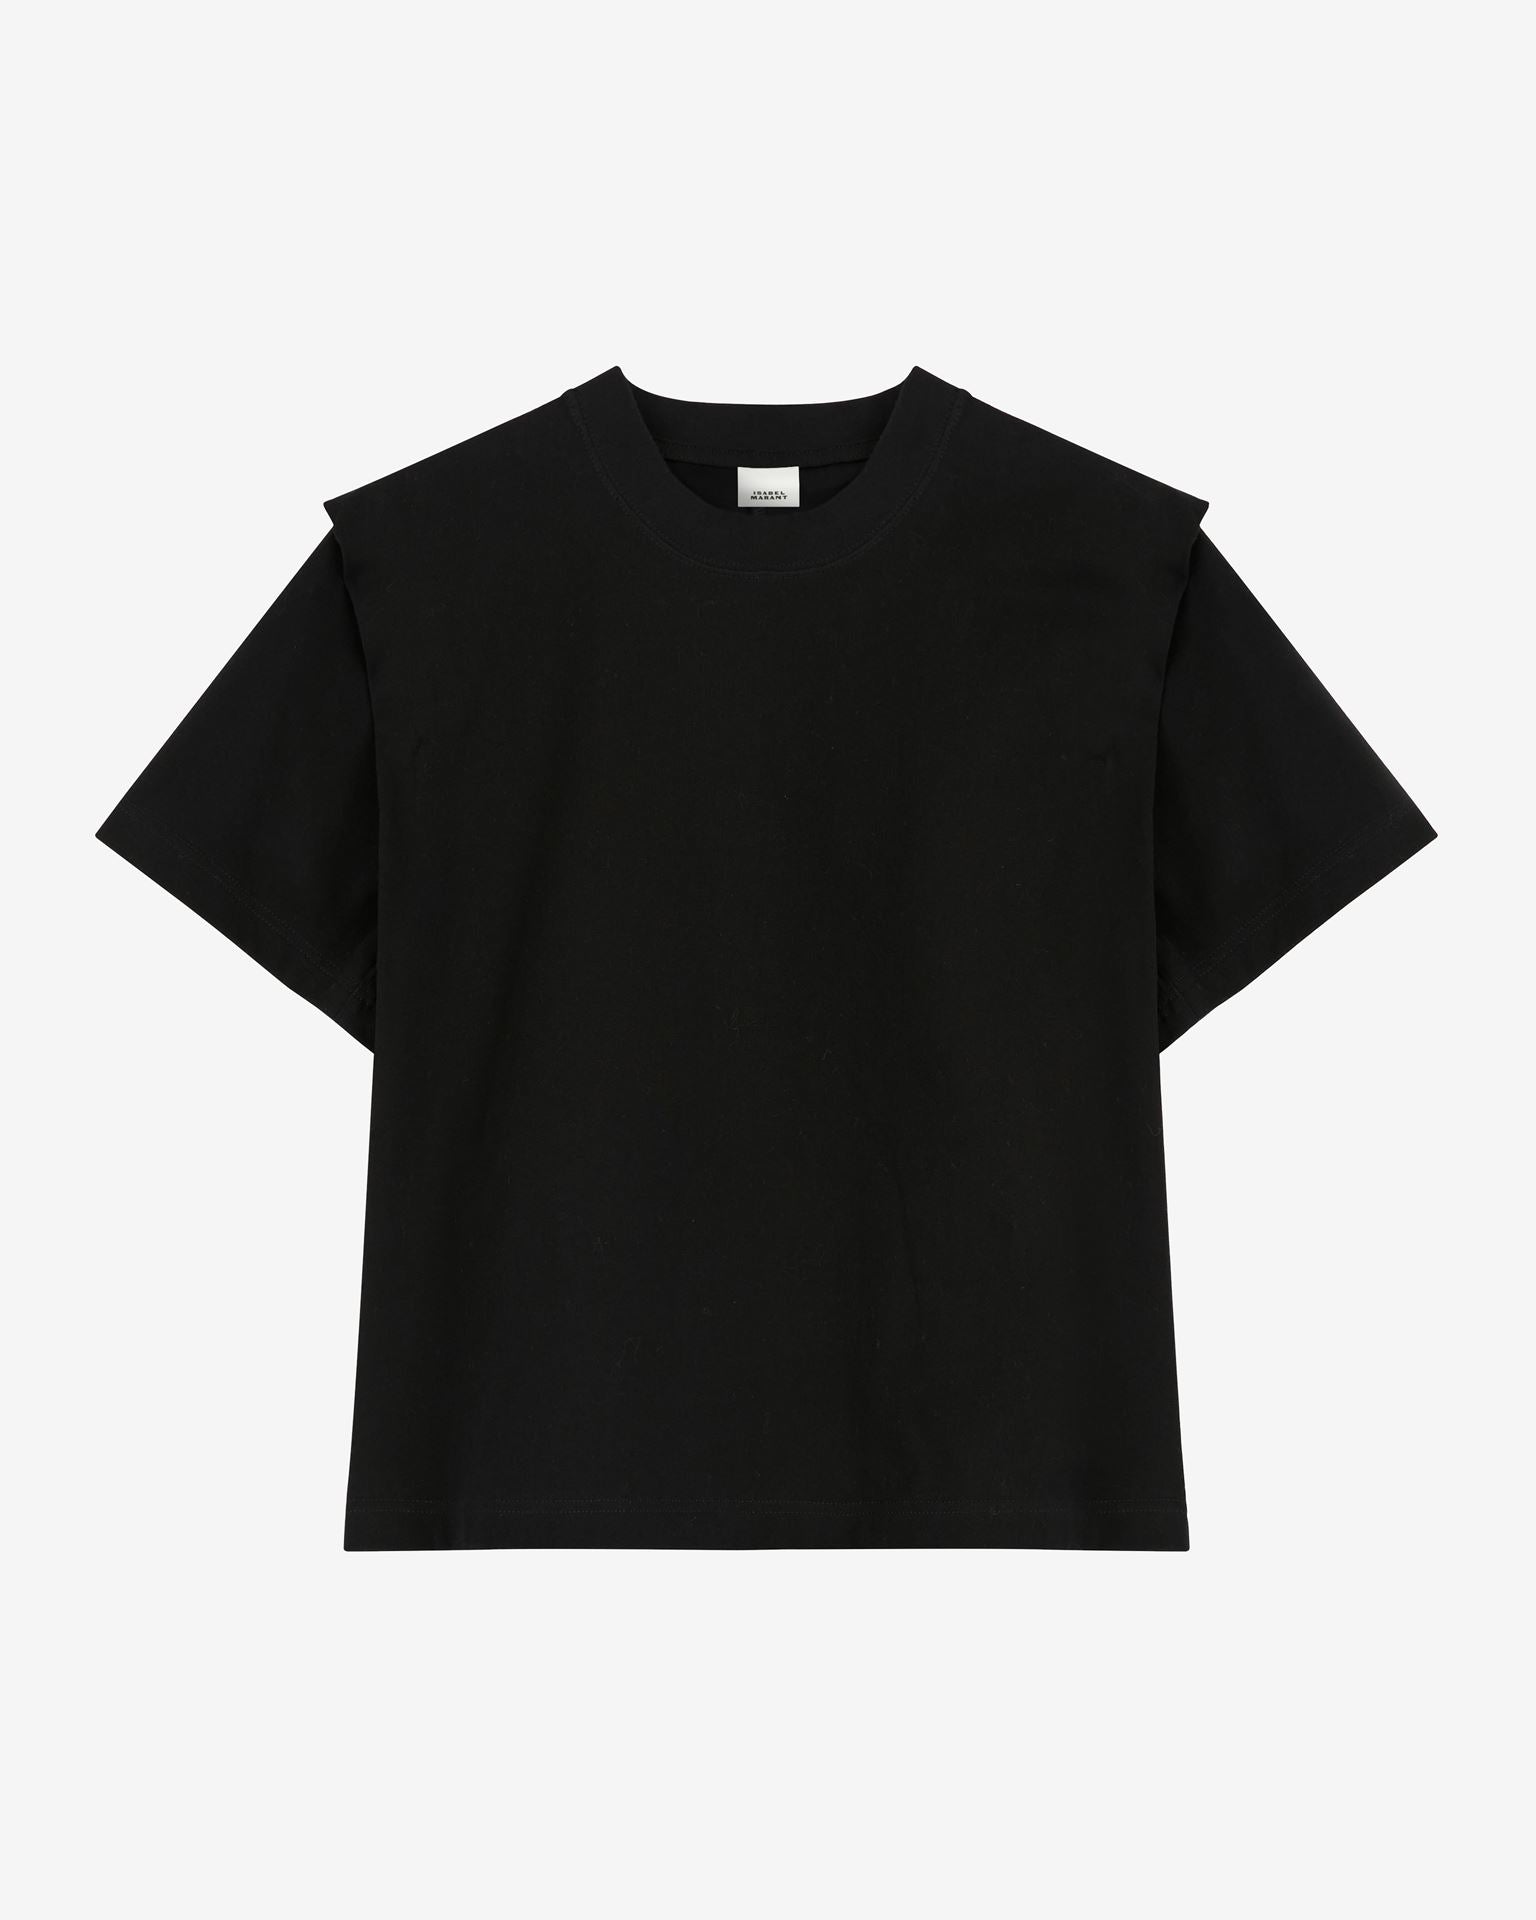 Zelitos tee shirt, black